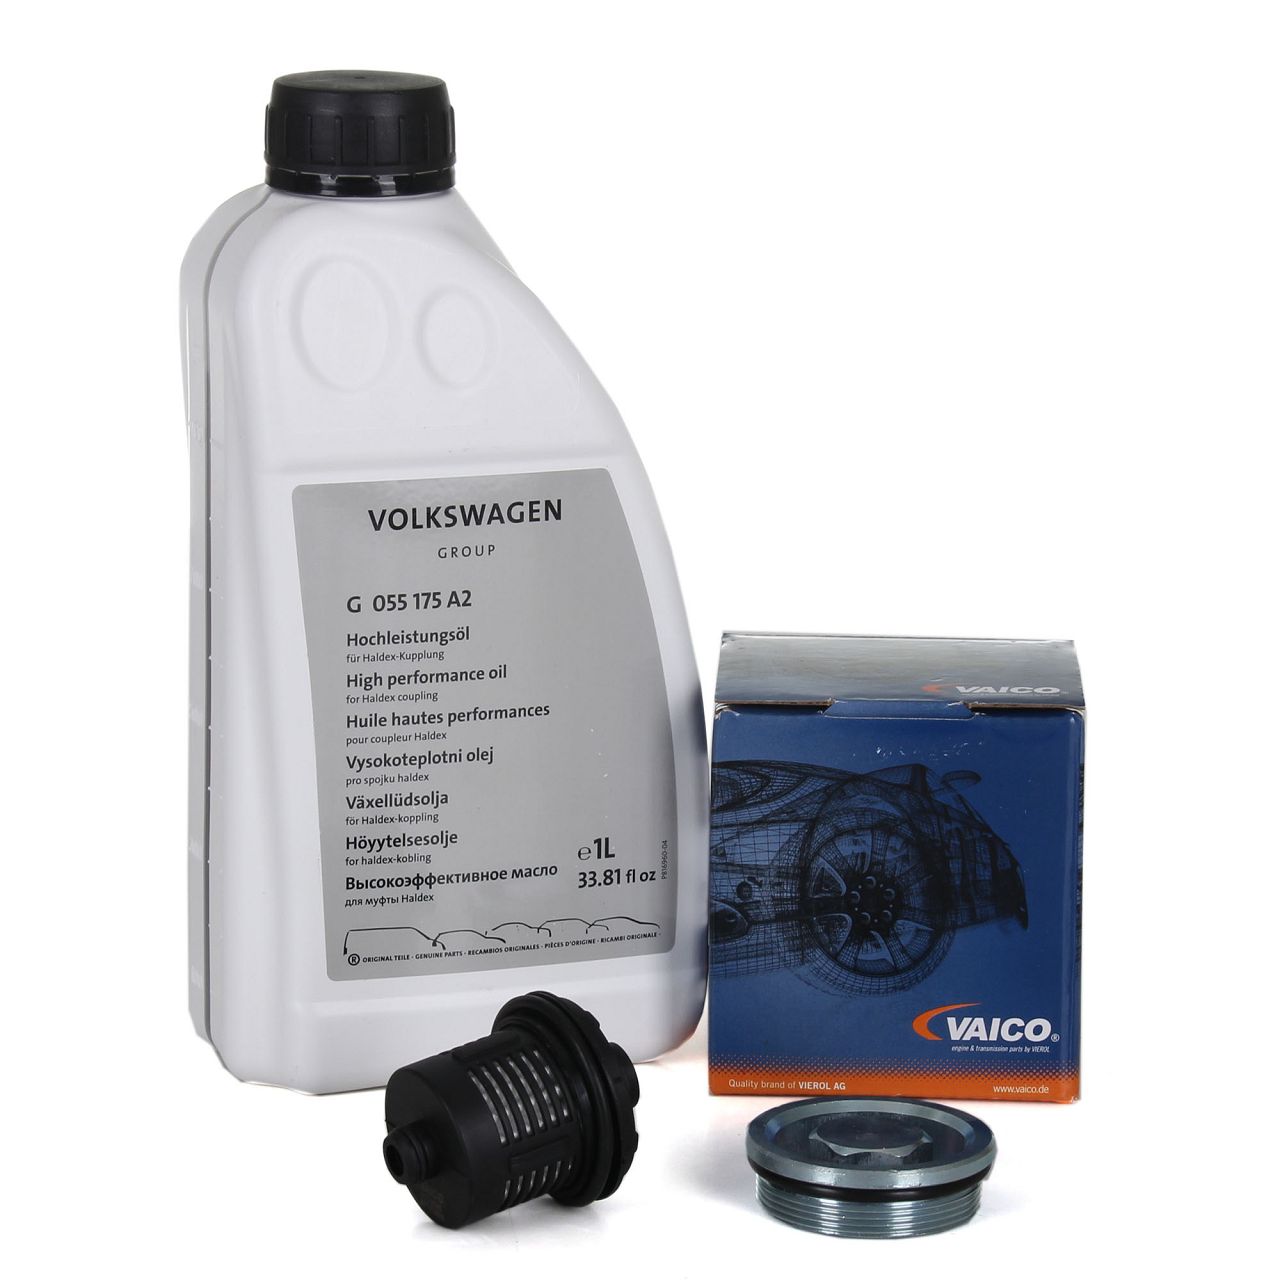 VAICO Getriebefilter + FEBI Hochleistungsöl Haldex-Öl ALLRAD